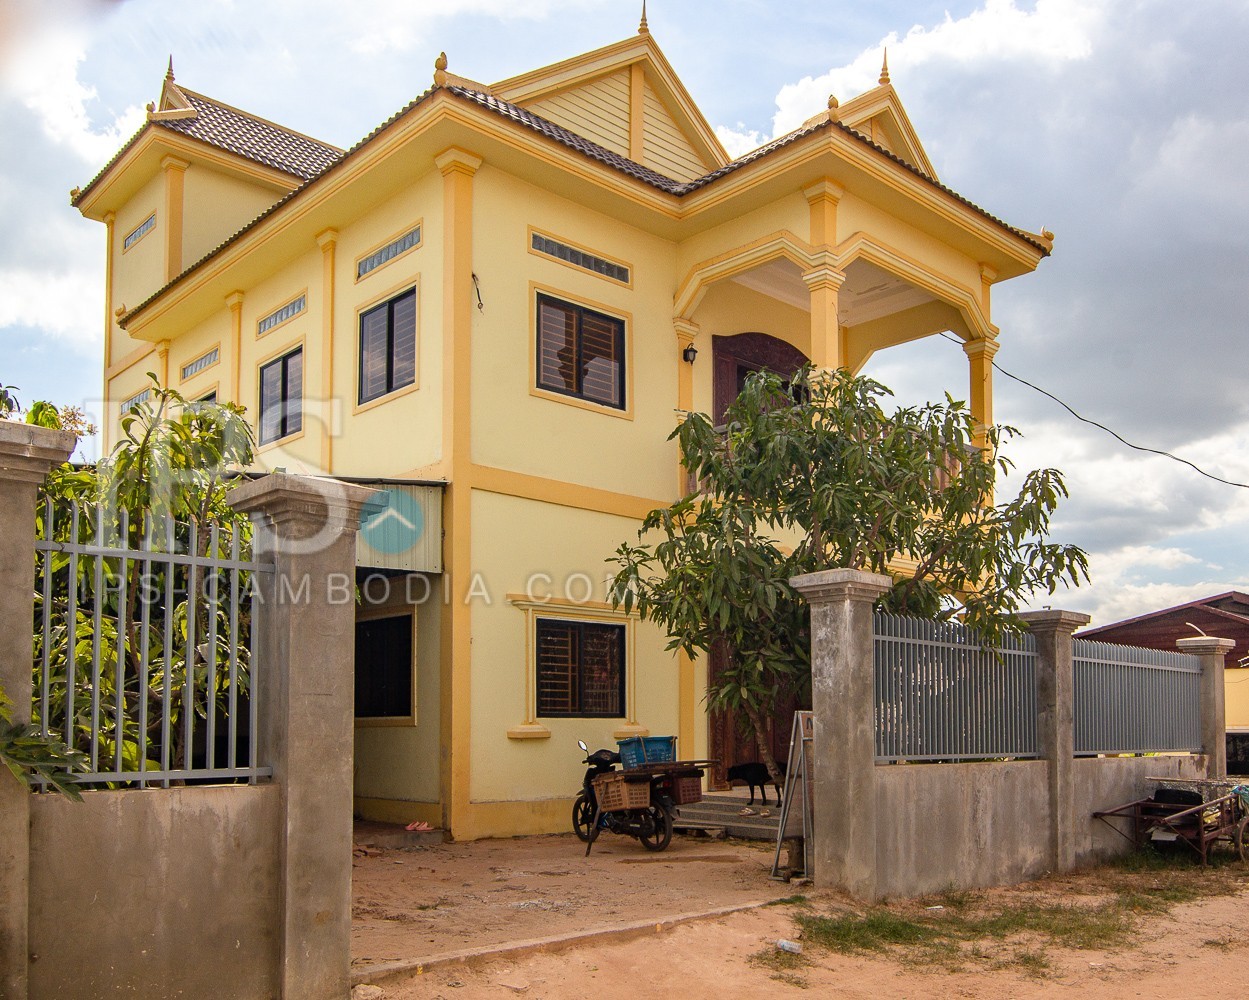 5 Bedroom House For Sale - Sangkat Siem Reap, Siem Reap thumbnail